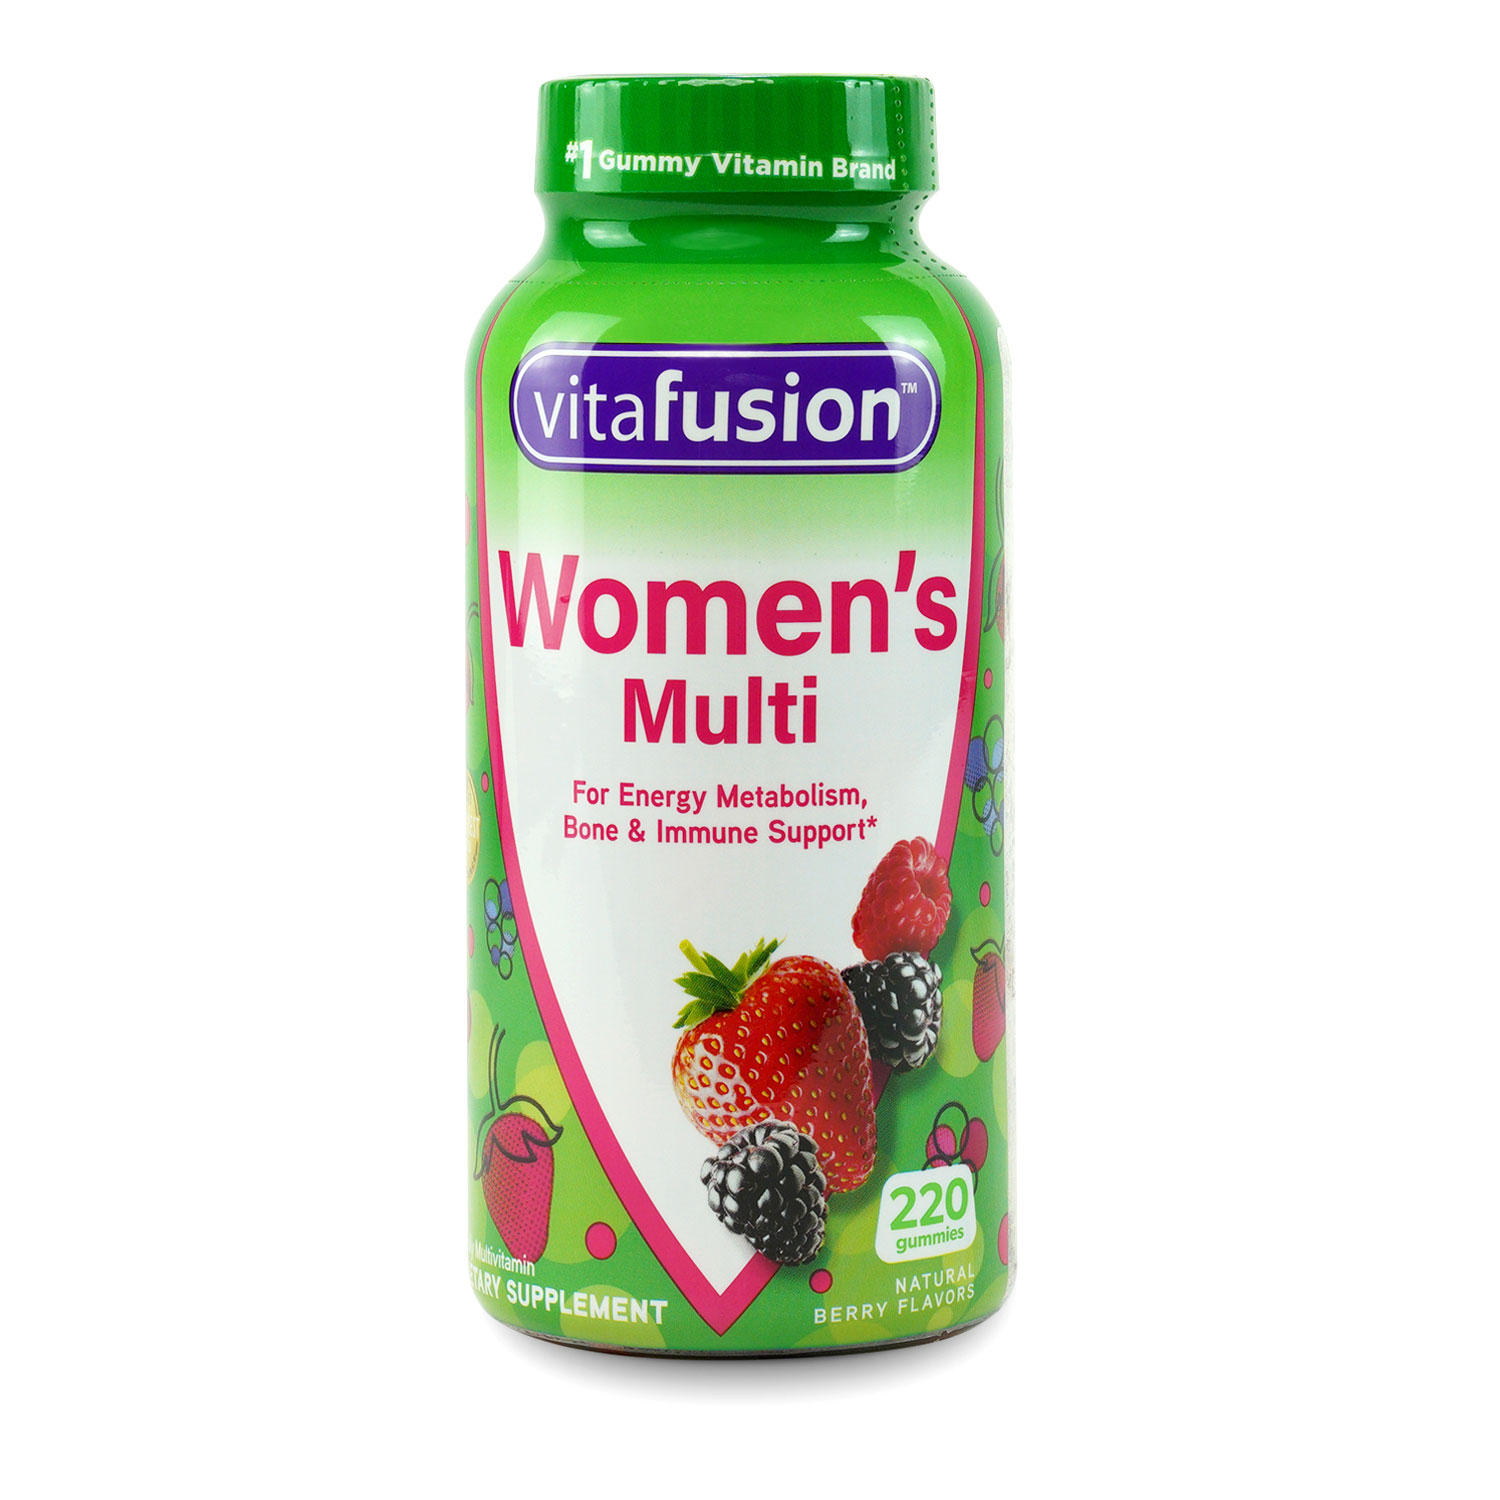 vitafusion Women’s Multivitamin, 220 Gummies